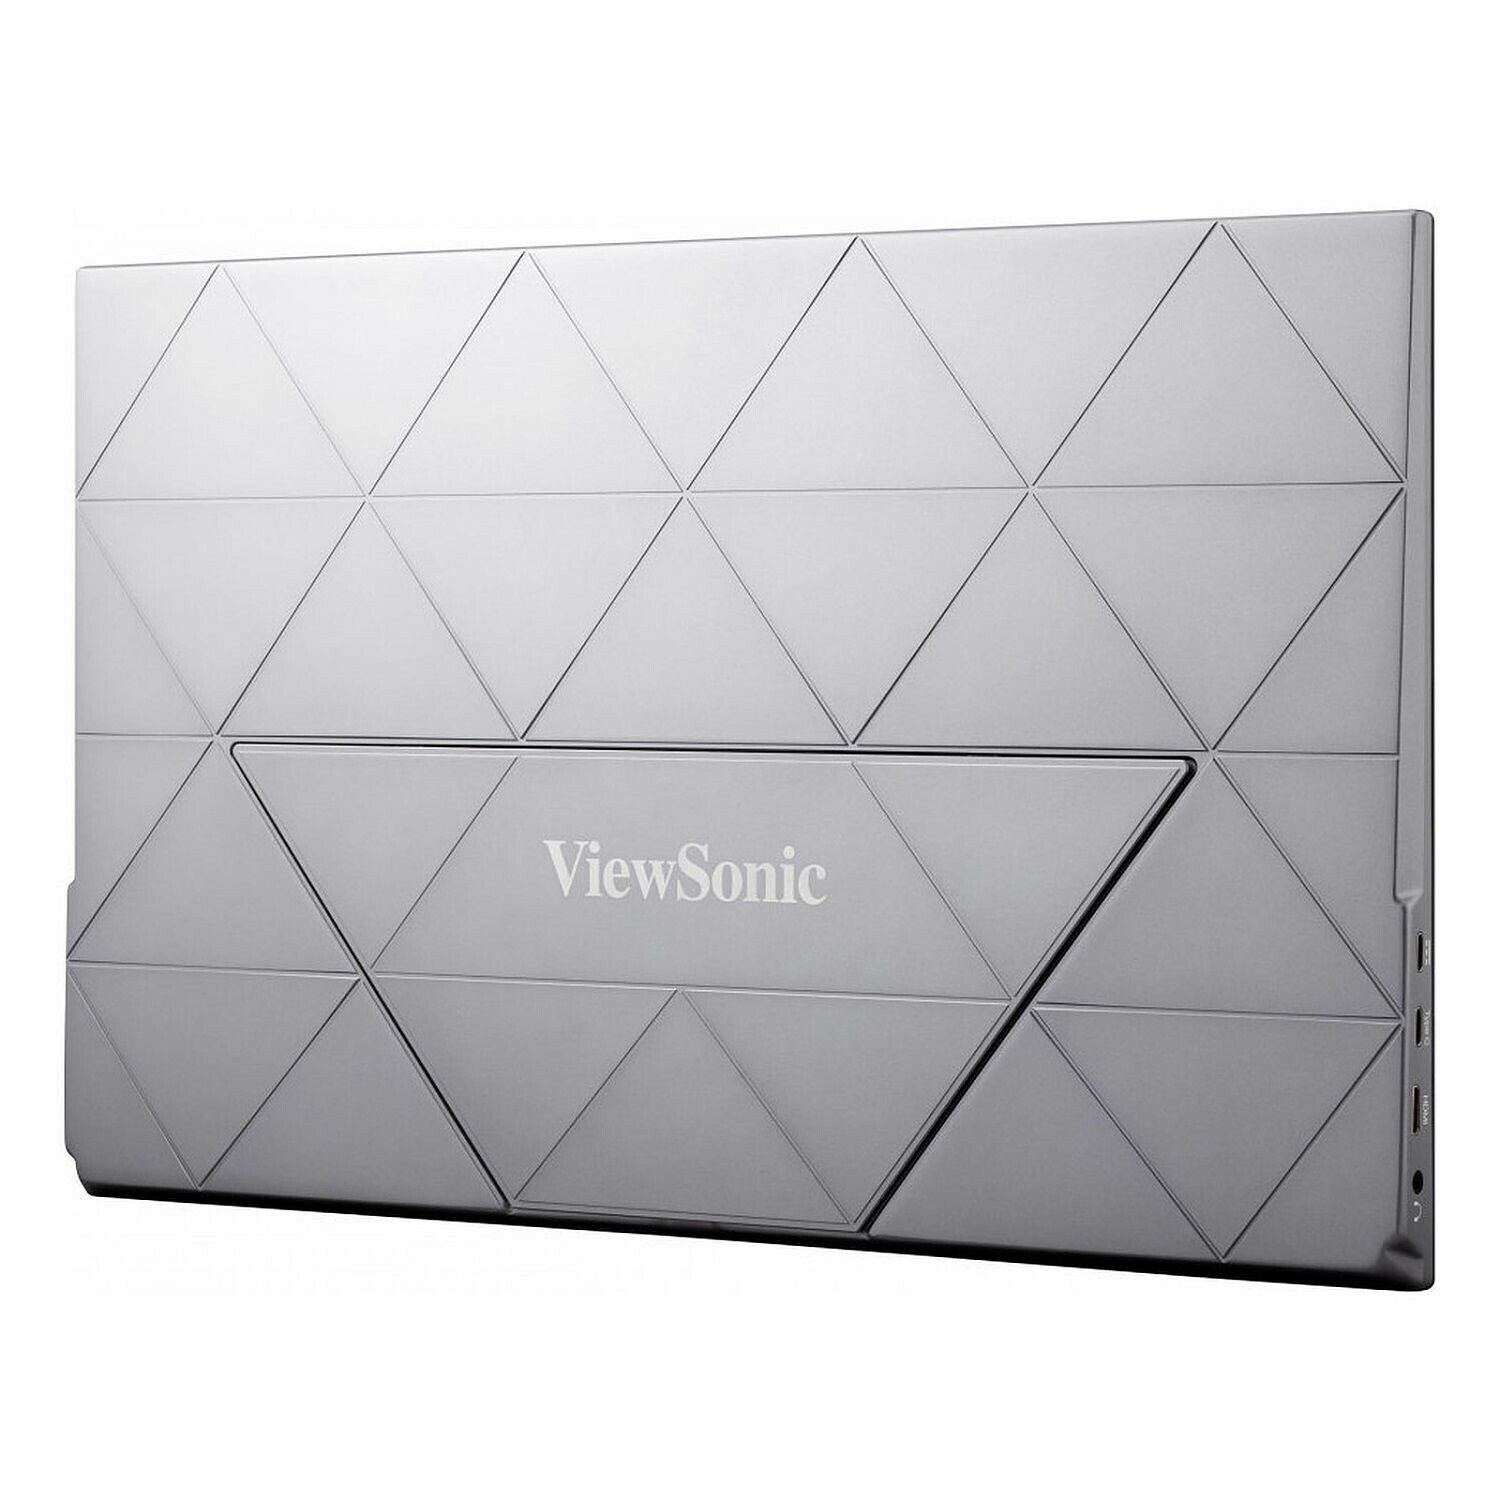 ViewSonic VX1755 (image:2)